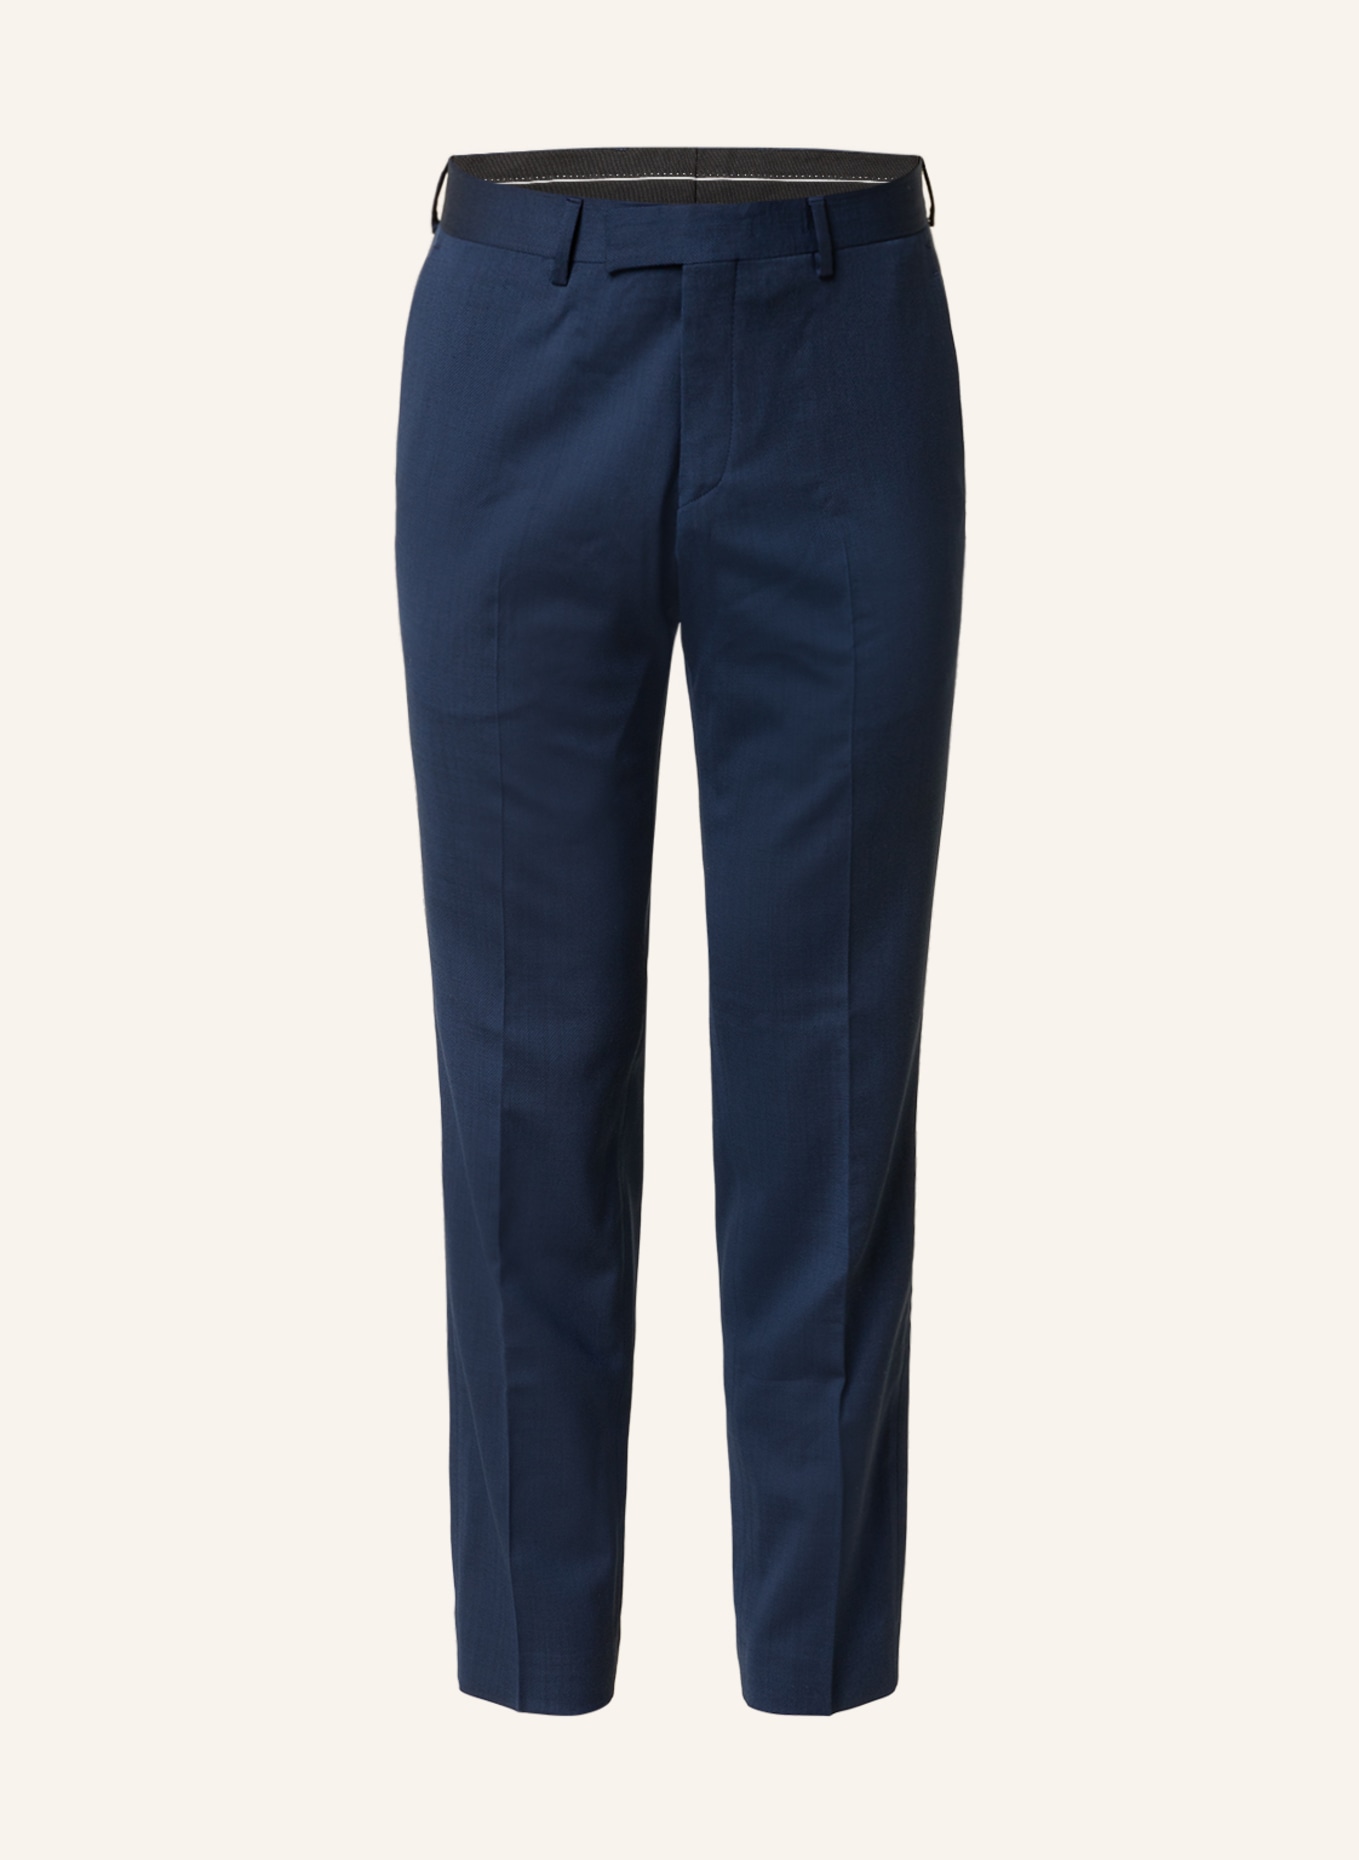 TIGER OF SWEDEN Spodnie garniturowe TORDON slim fit, Kolor: 208 blue(Obrazek null)